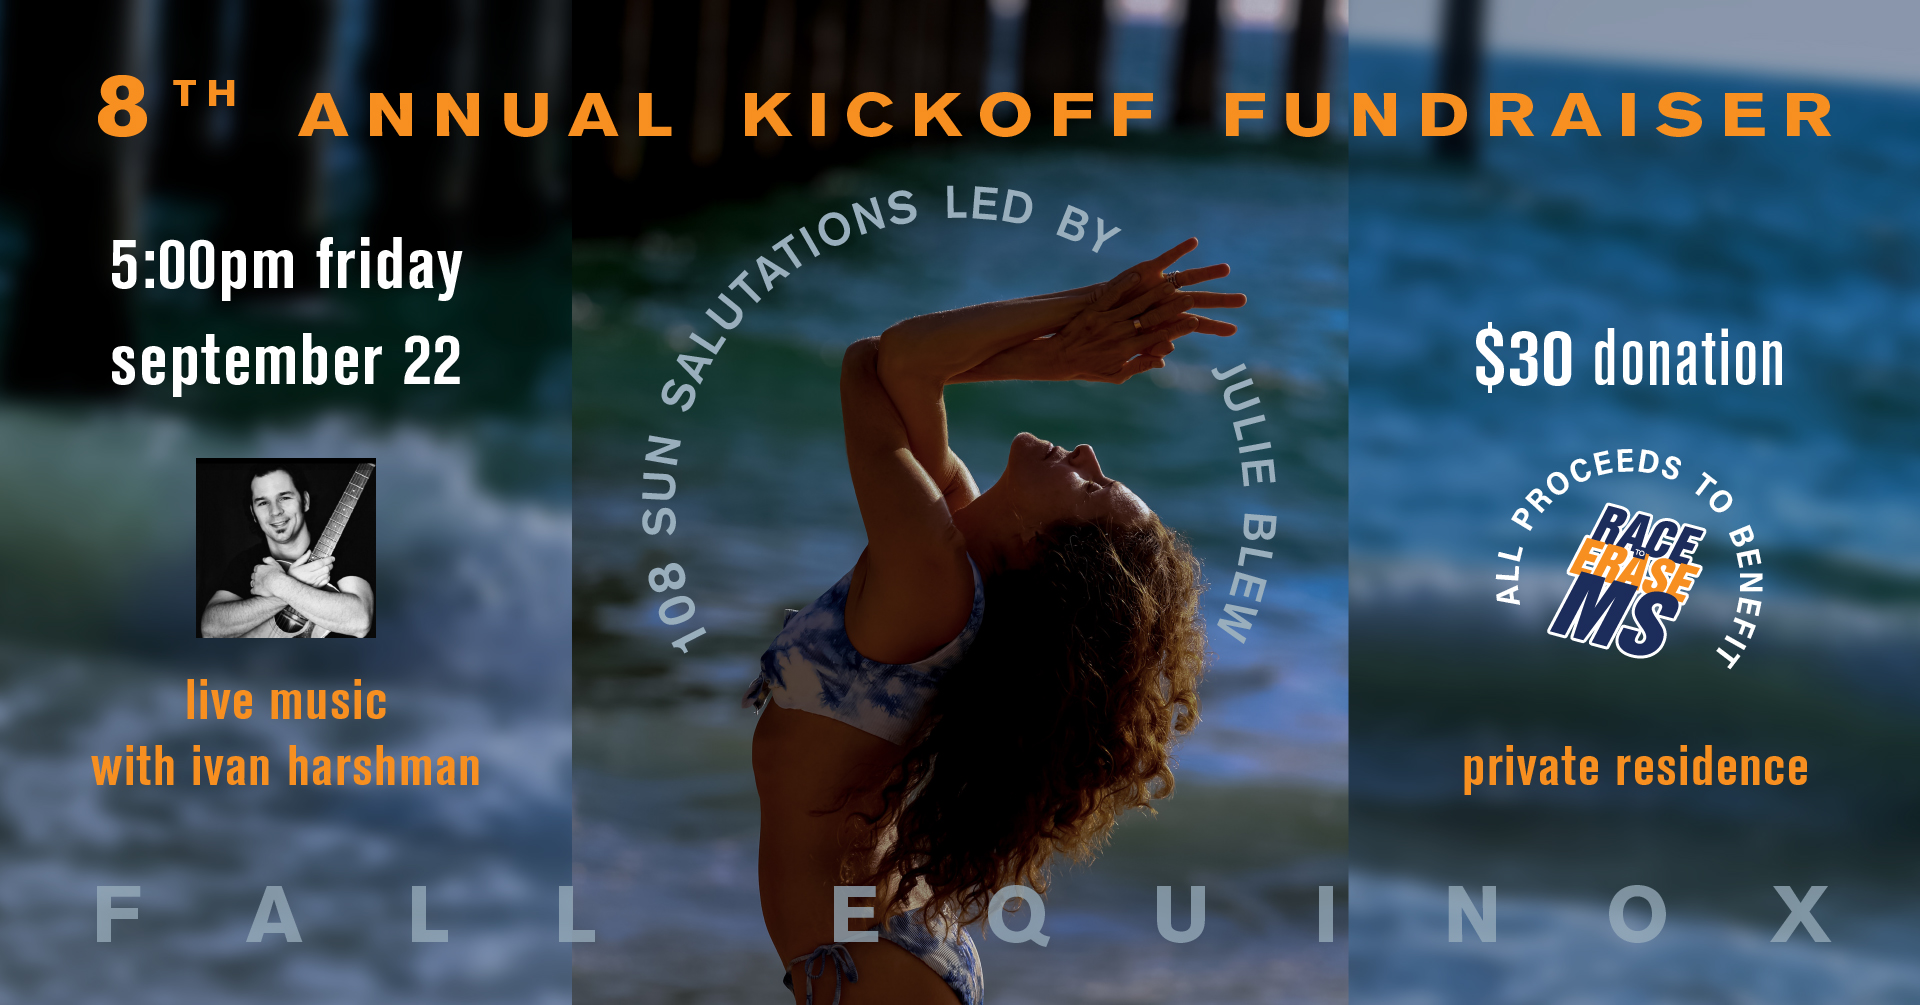 8th Annual Kickoff Fundraiser - Fall Equinox